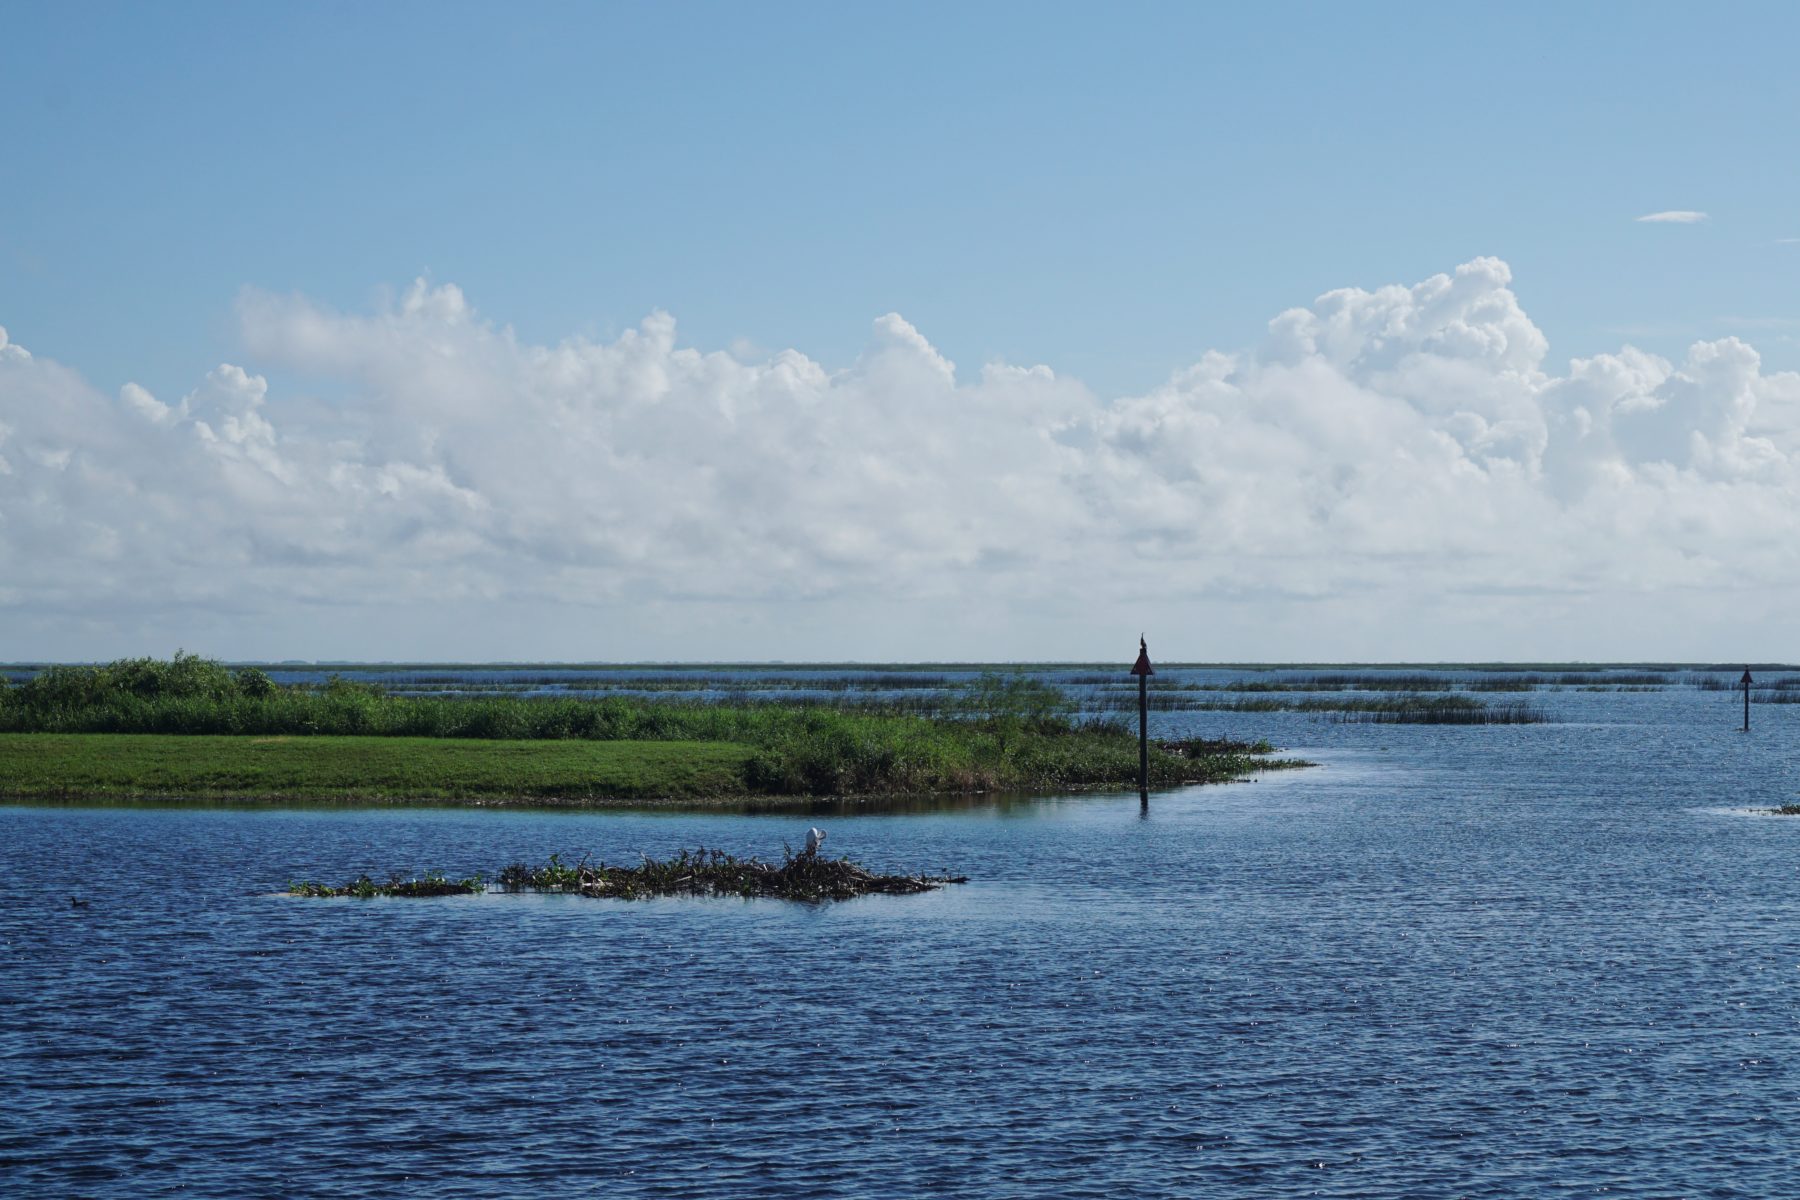 Jason Brodeur bill expediting restoration north of Lake O sails through first committee - Florida Politics